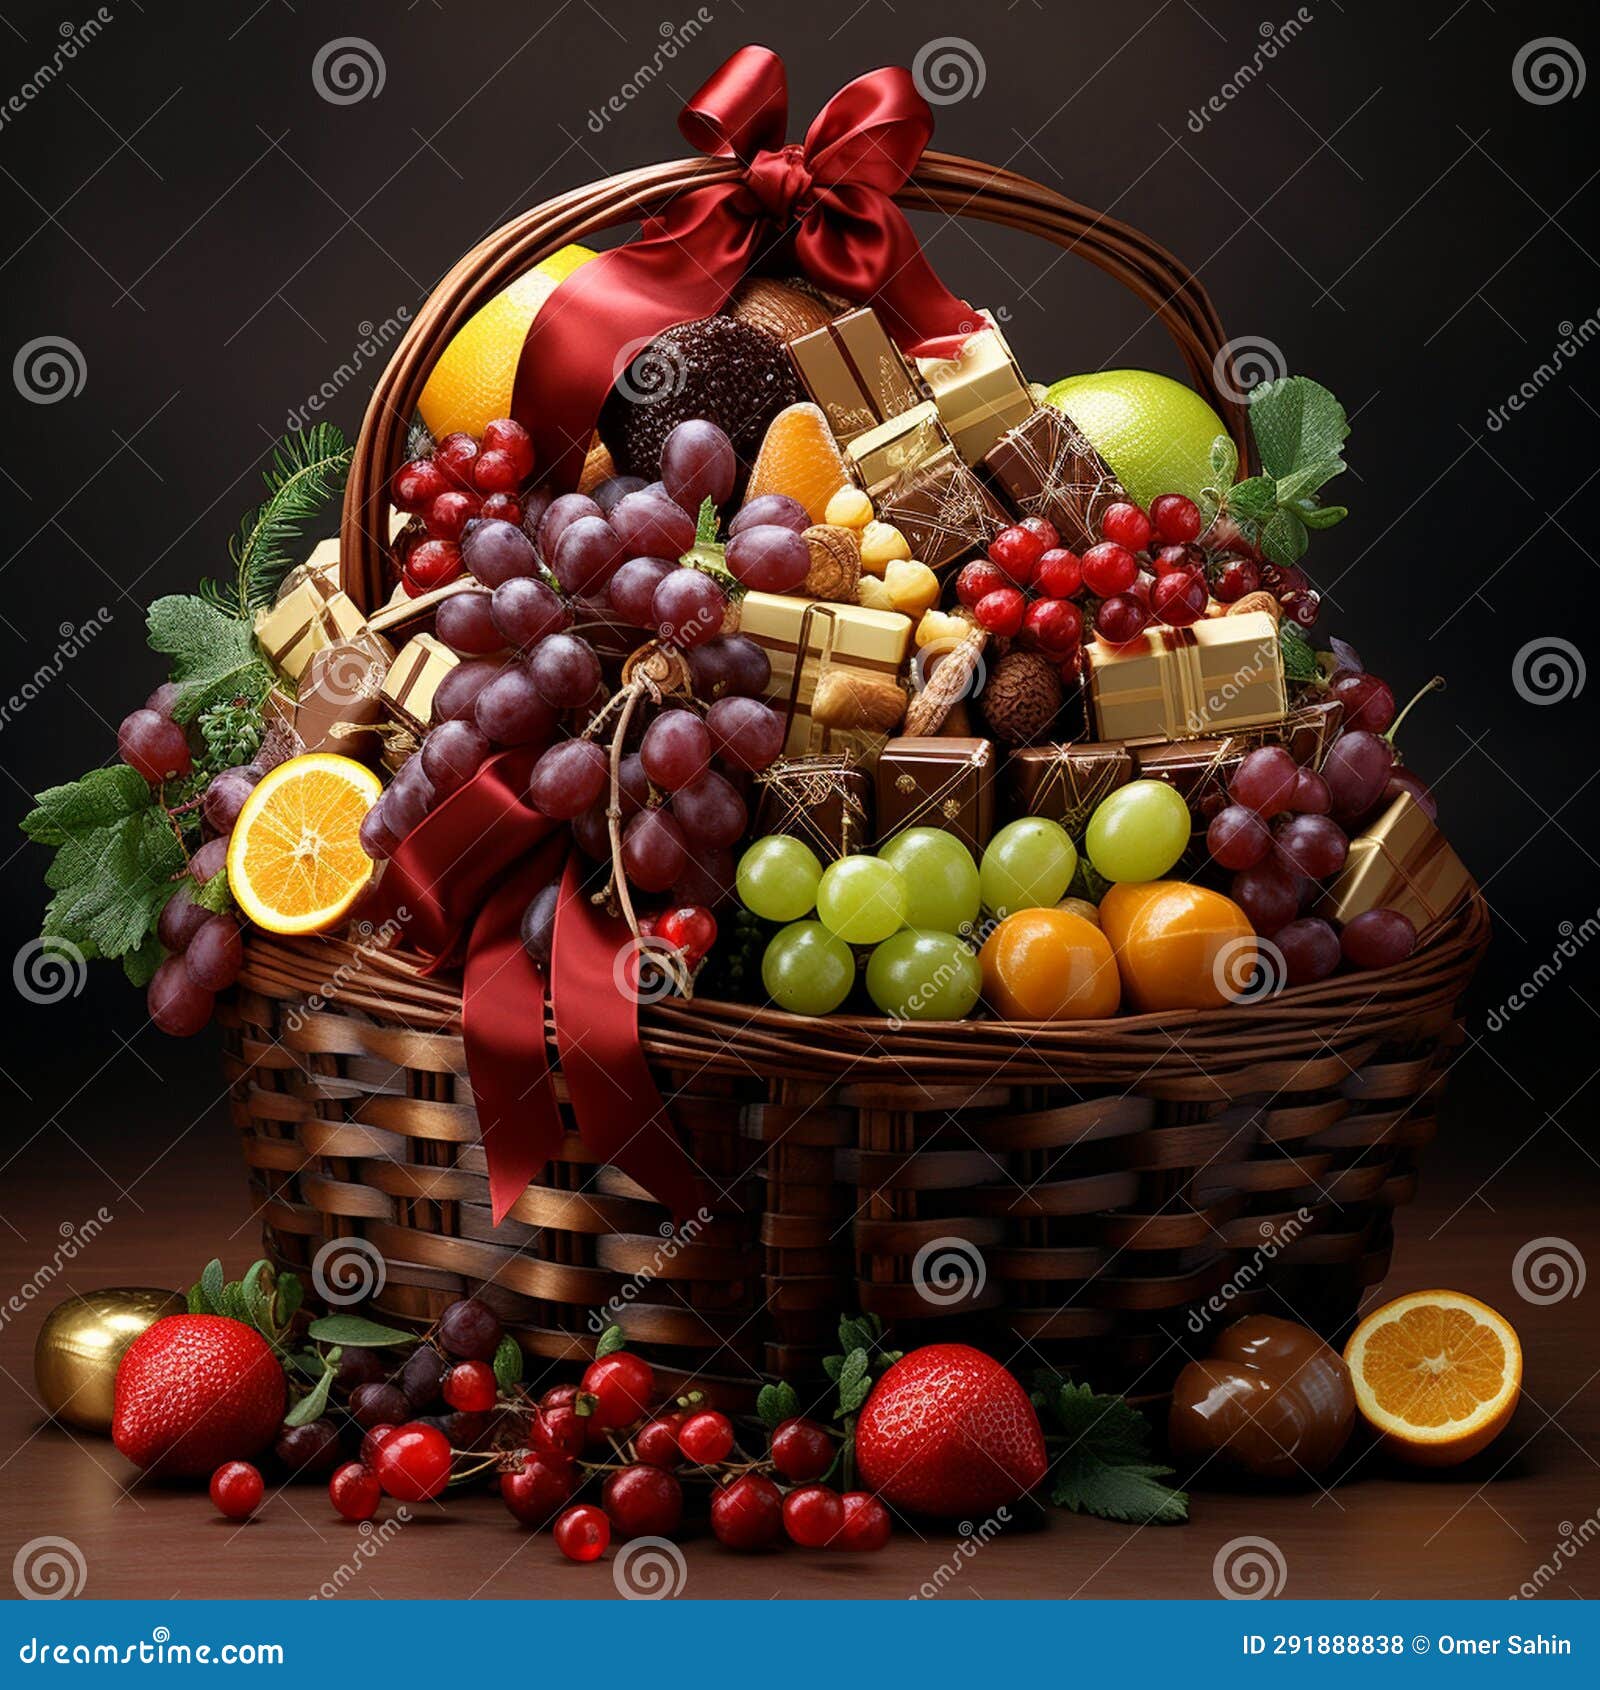 Plentiful Pleasures: an Abundance of Festive Pleasures in a Basket ...